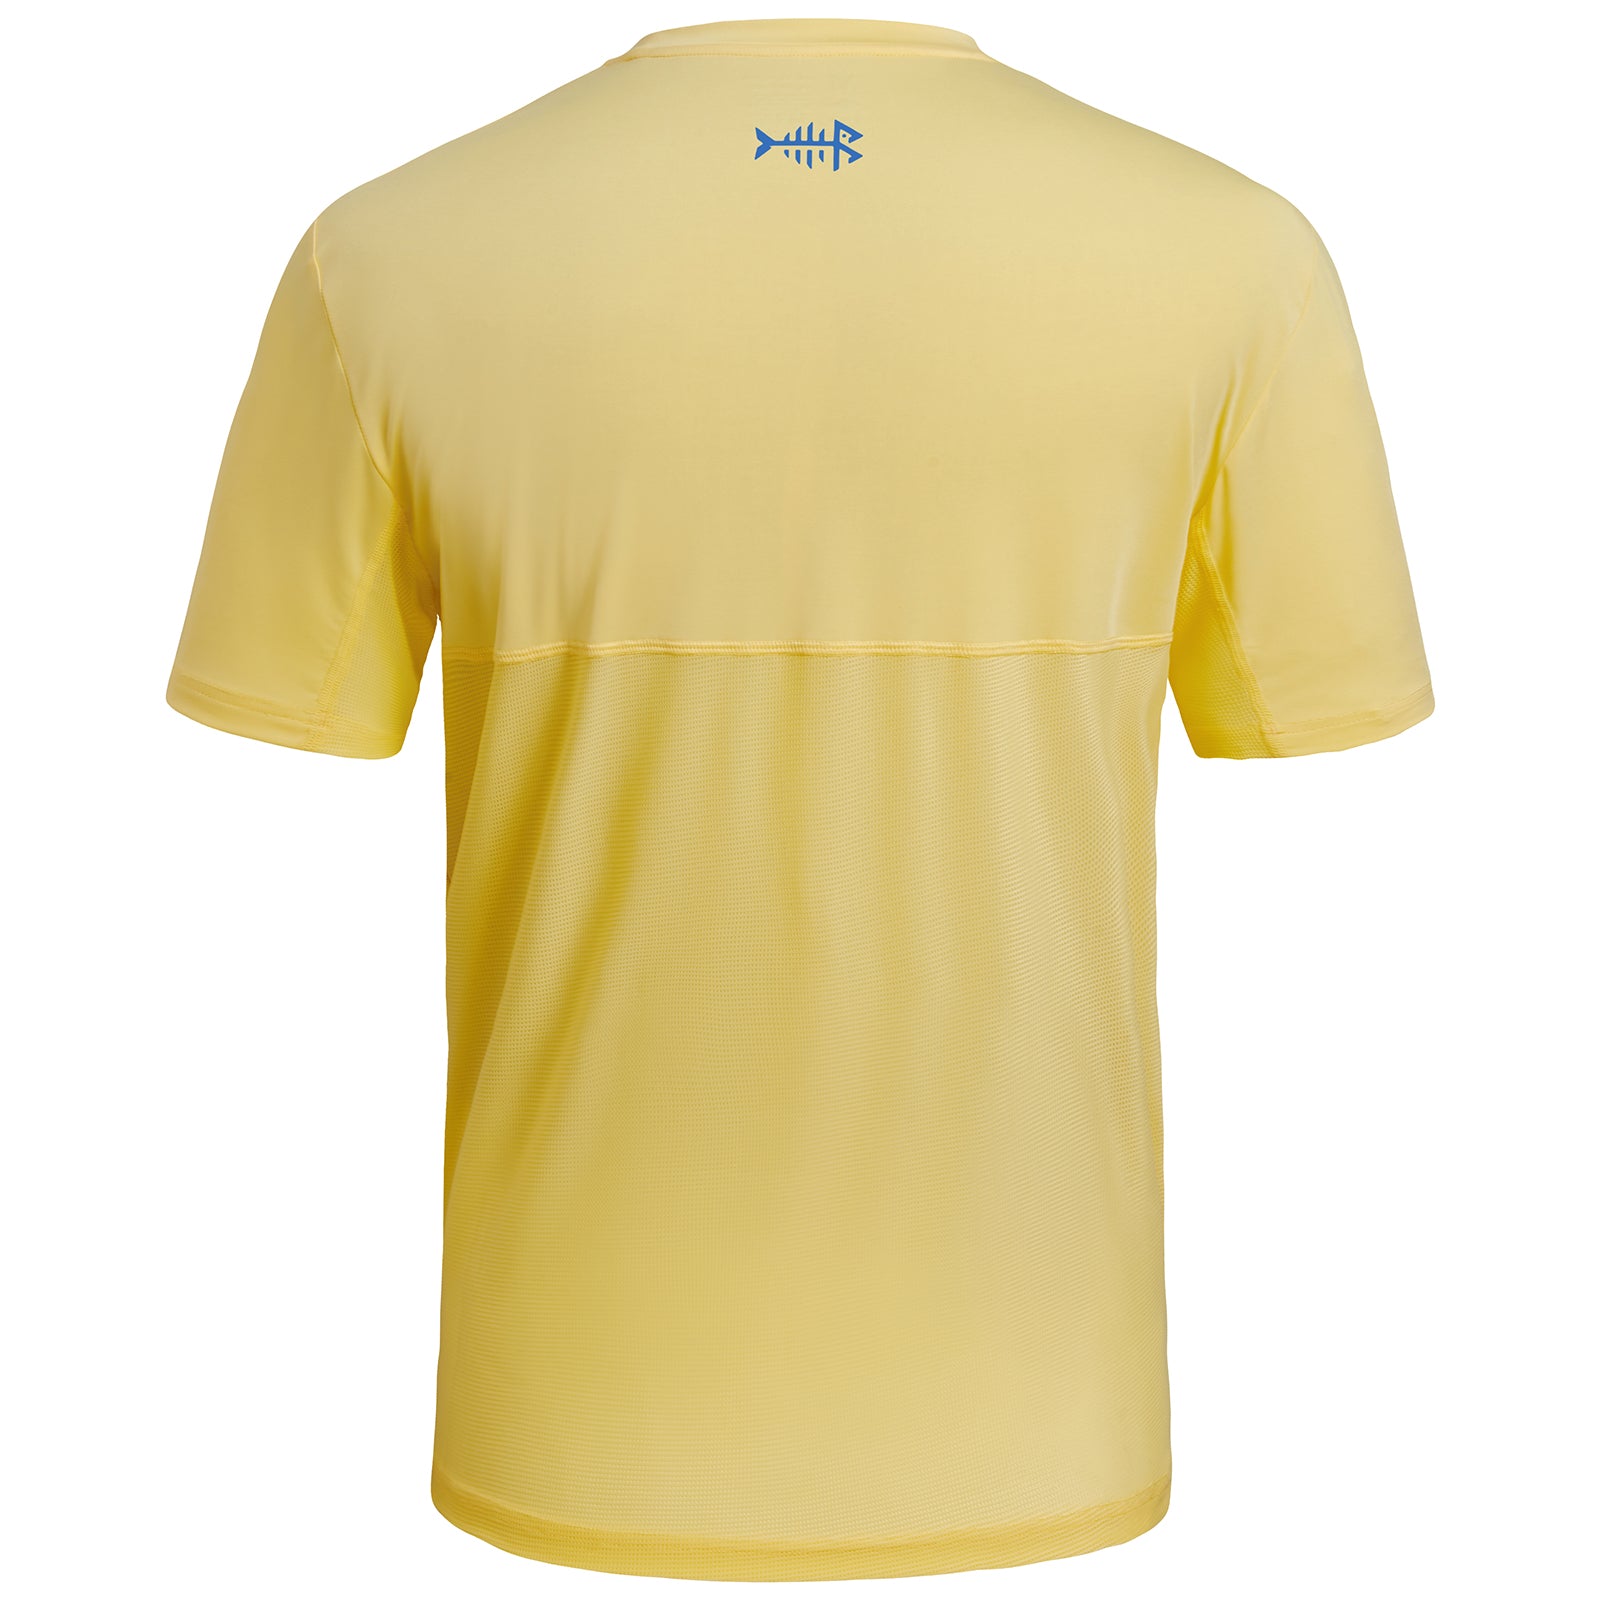 Bassdash Men’s UPF 50+ Performance Fishing T-Shirt Quick Dry Short Sleeve Active Shirt, Apple Green/Dark Grey Logo / M